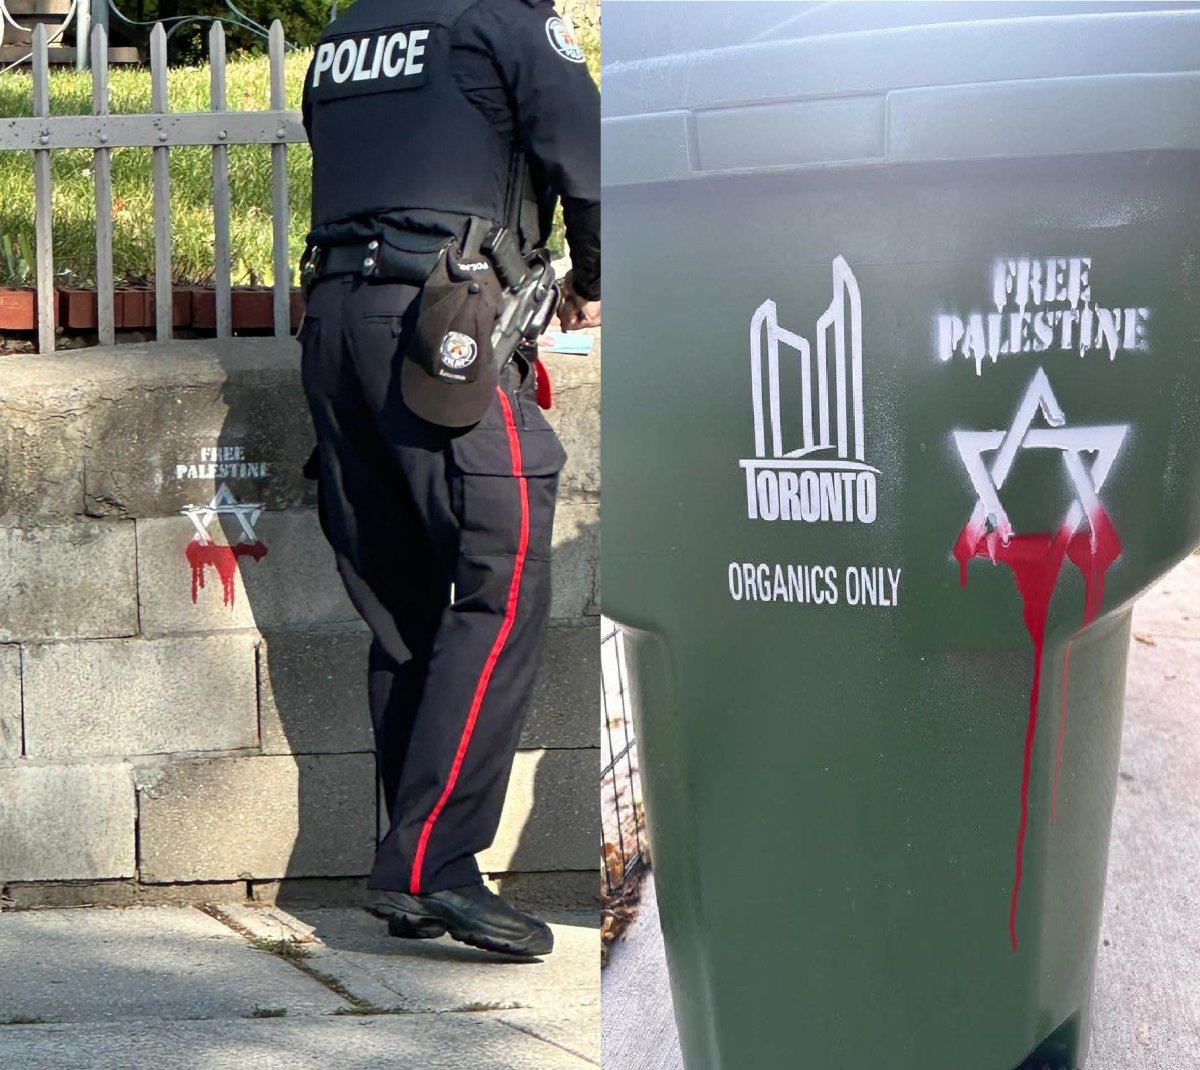 Anti-Semitic graffiti spray painted on several locations in Toronto.